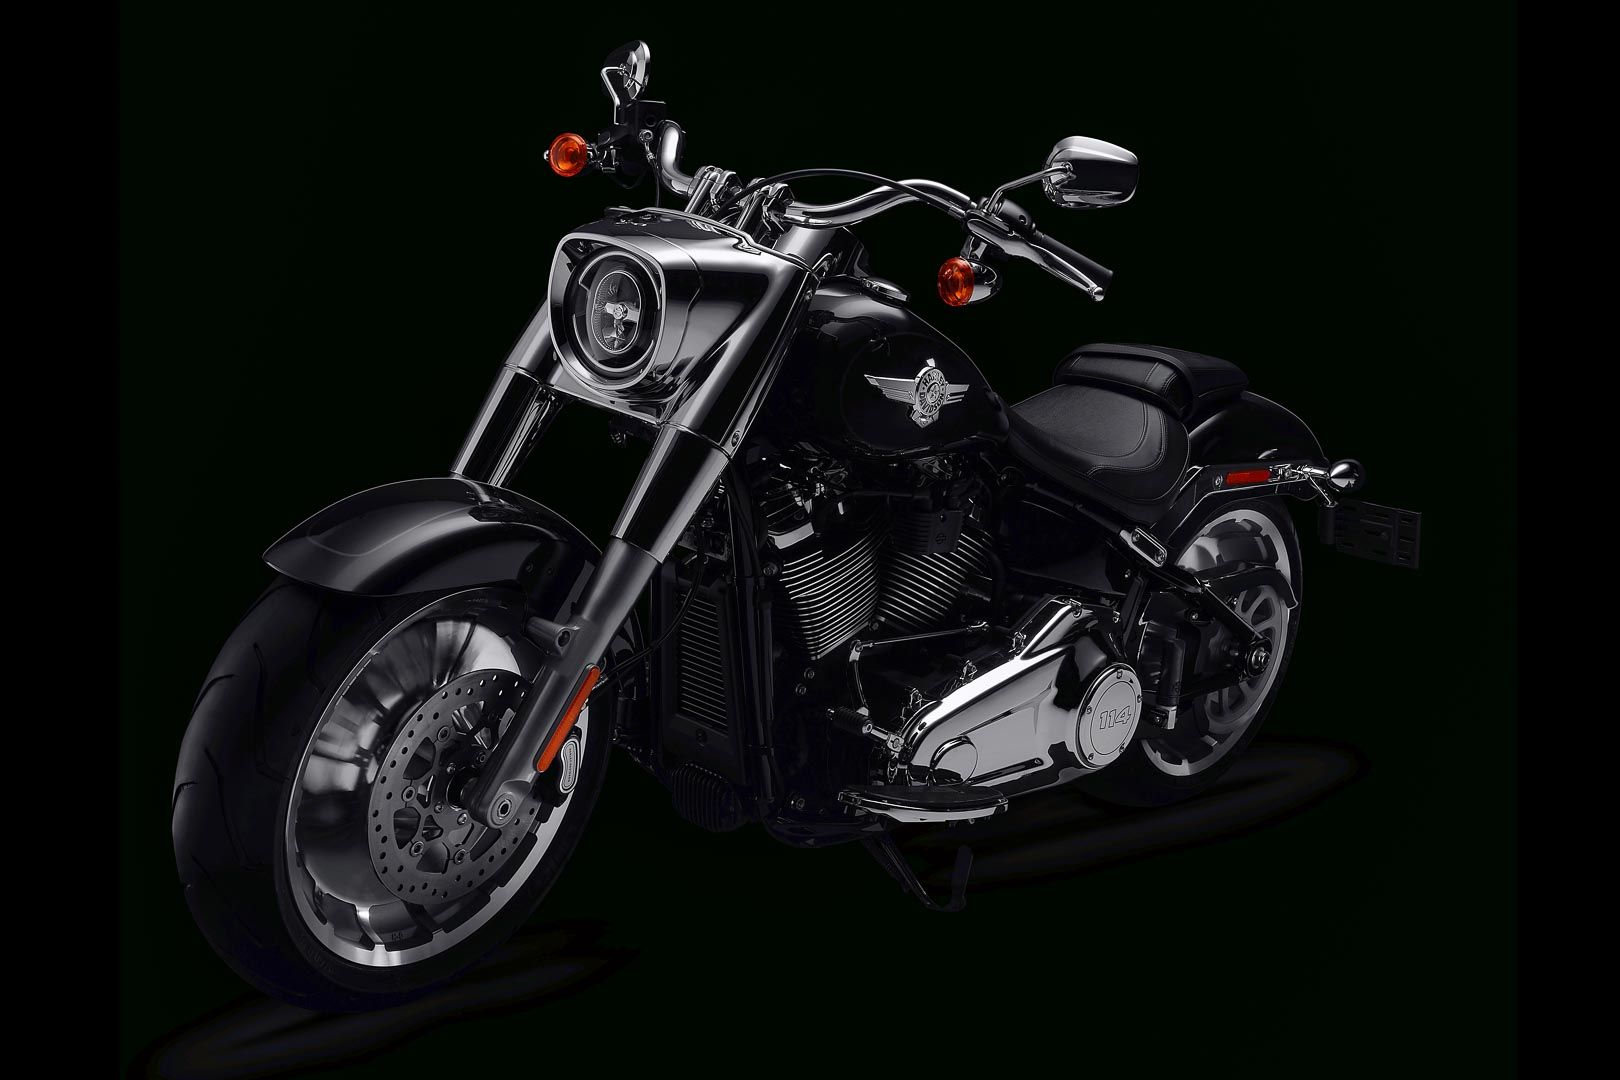 2021-Harley-Davidson-Fat-Boy-114-First-Look-cruiser-motorcycle-6